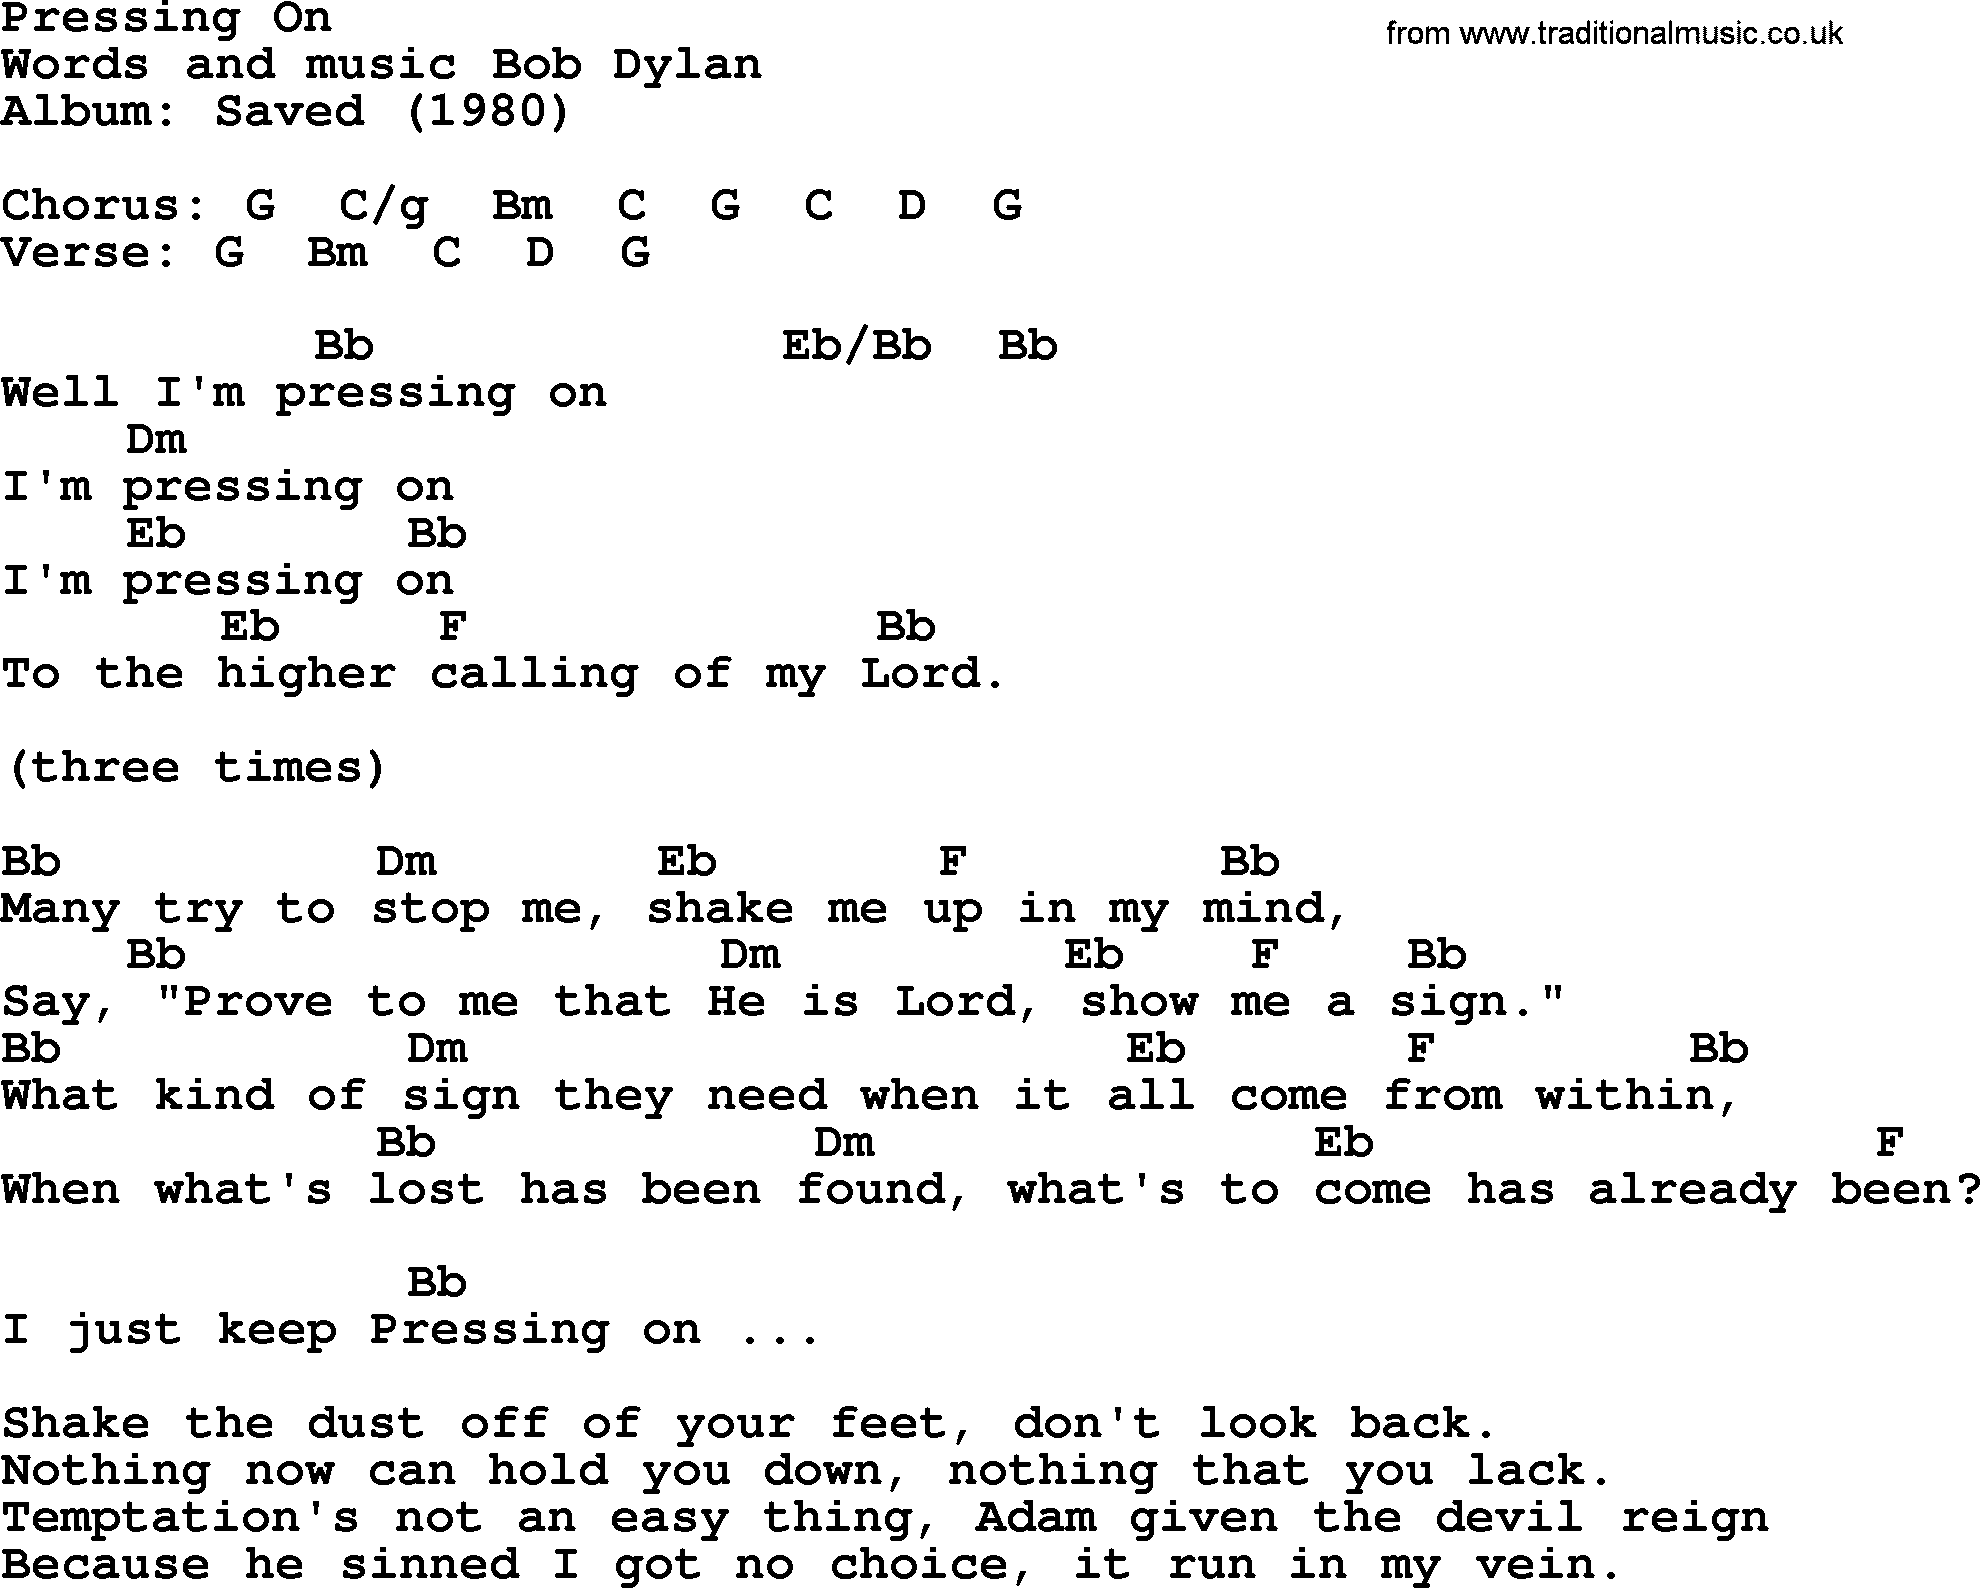 Bob Dylan song, lyrics with chords - Pressing On